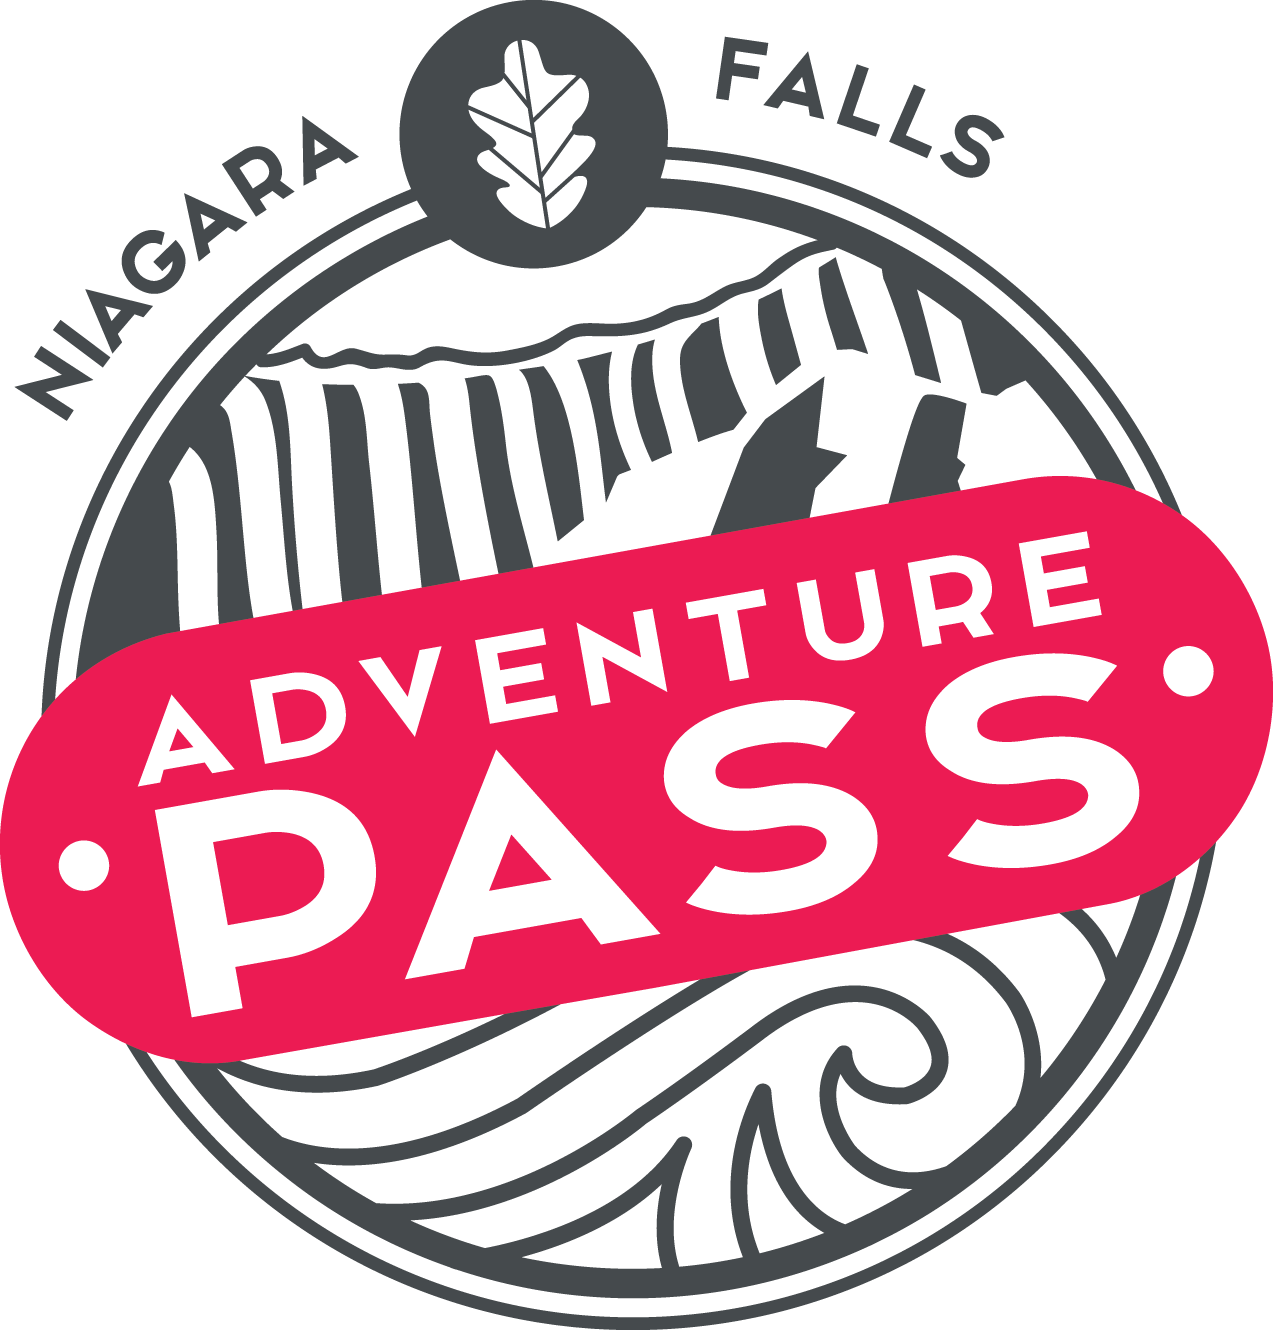 Your Niagara Falls Adventure Begins Here - Niagara Falls (1273x1330)